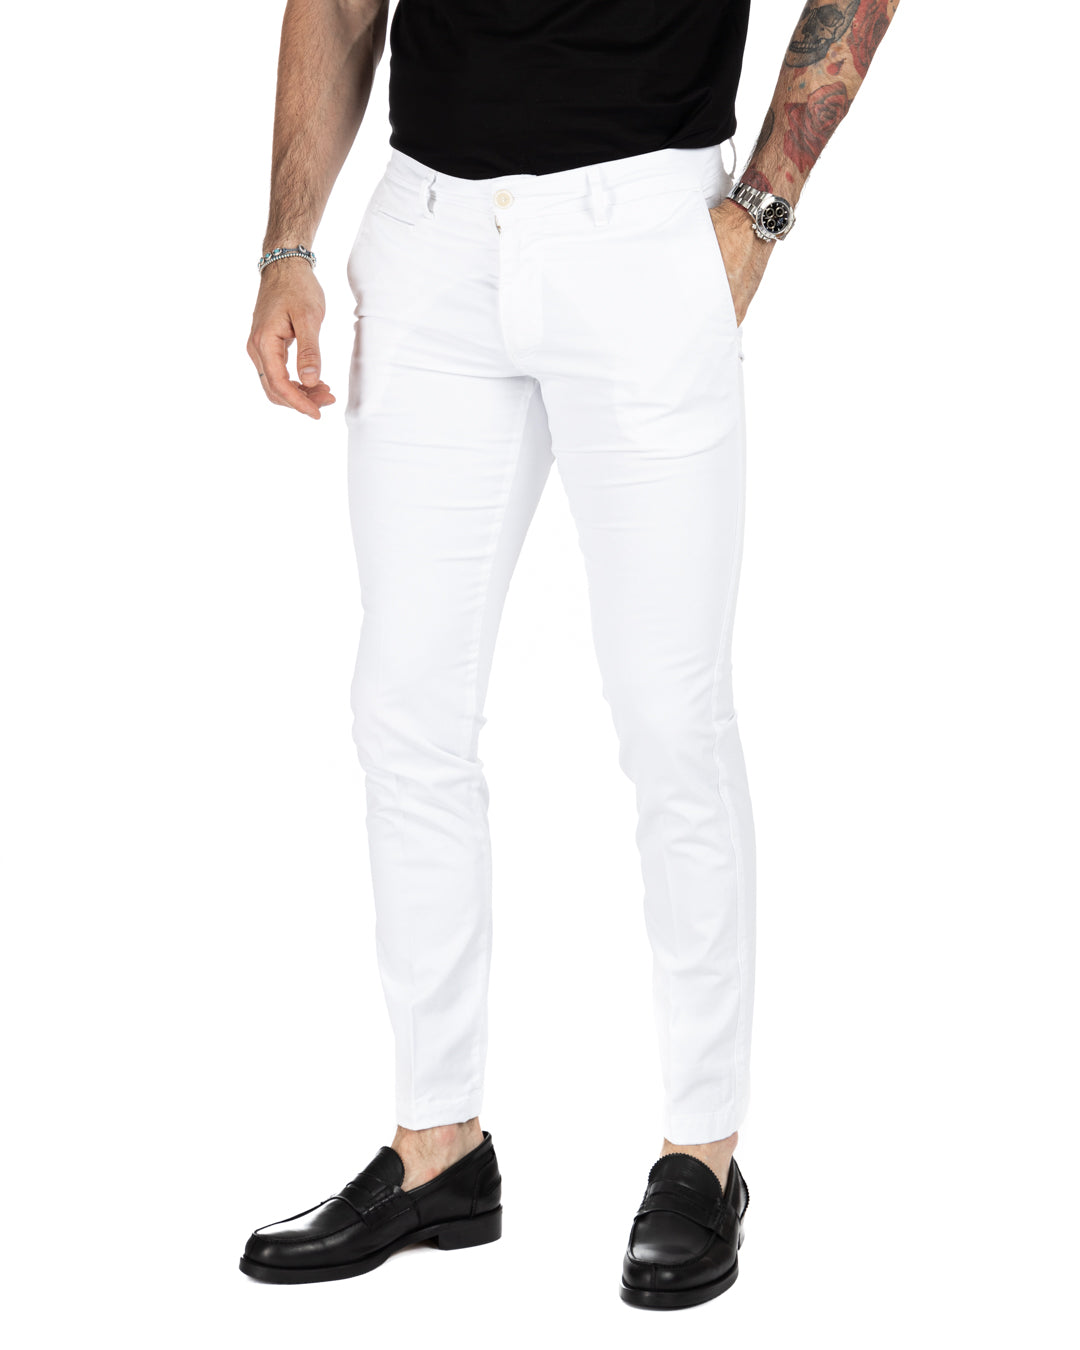 Frank - white basic trousers